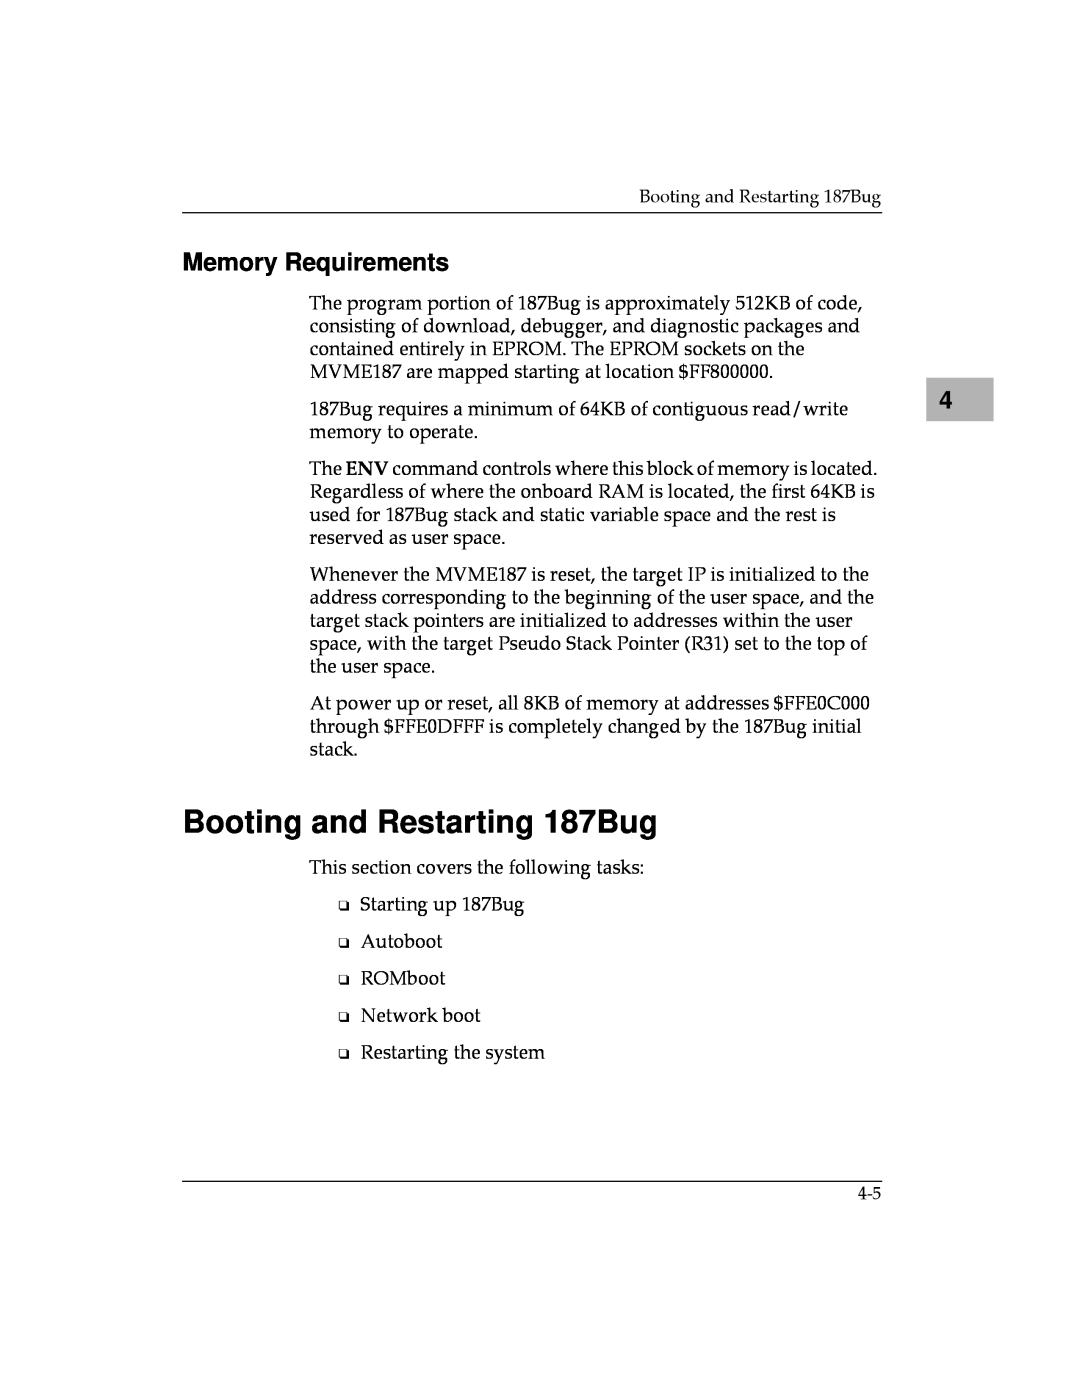 Motorola MVME187 manual Booting and Restarting 187Bug, Memory Requirements 